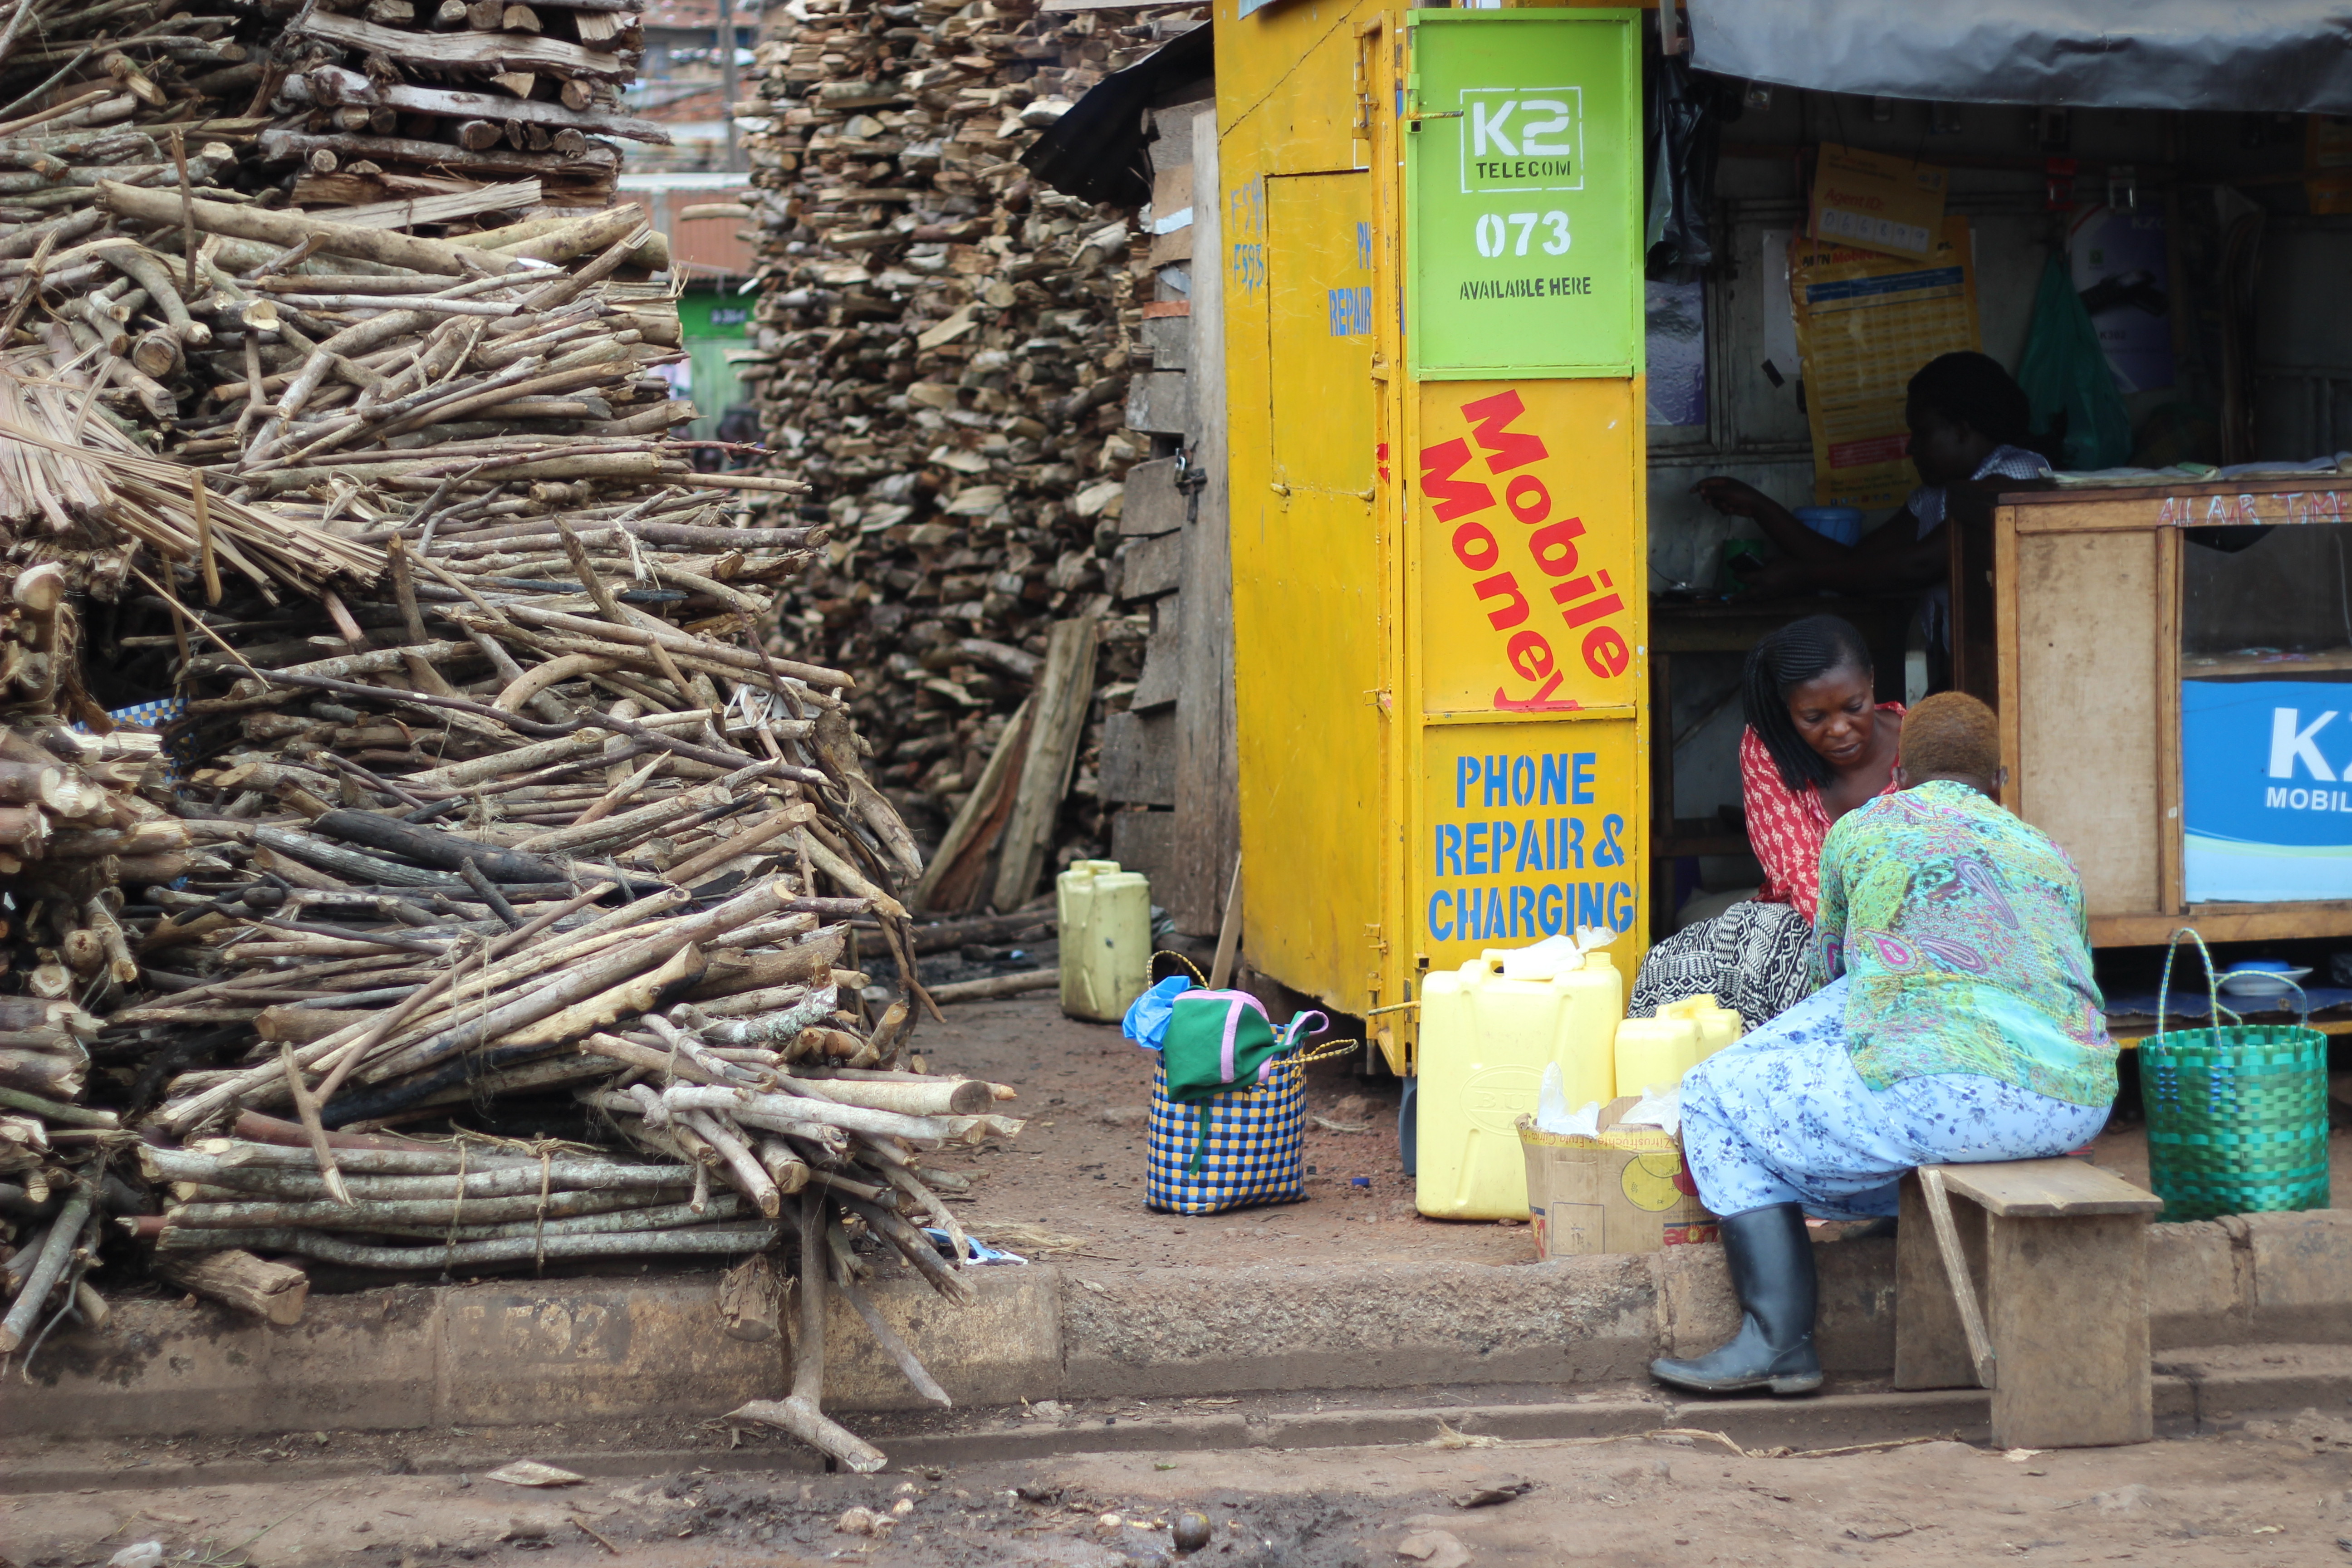 Women working at a market selling wood alongside operating a mobile phone repair shop in Kampala, Uganda